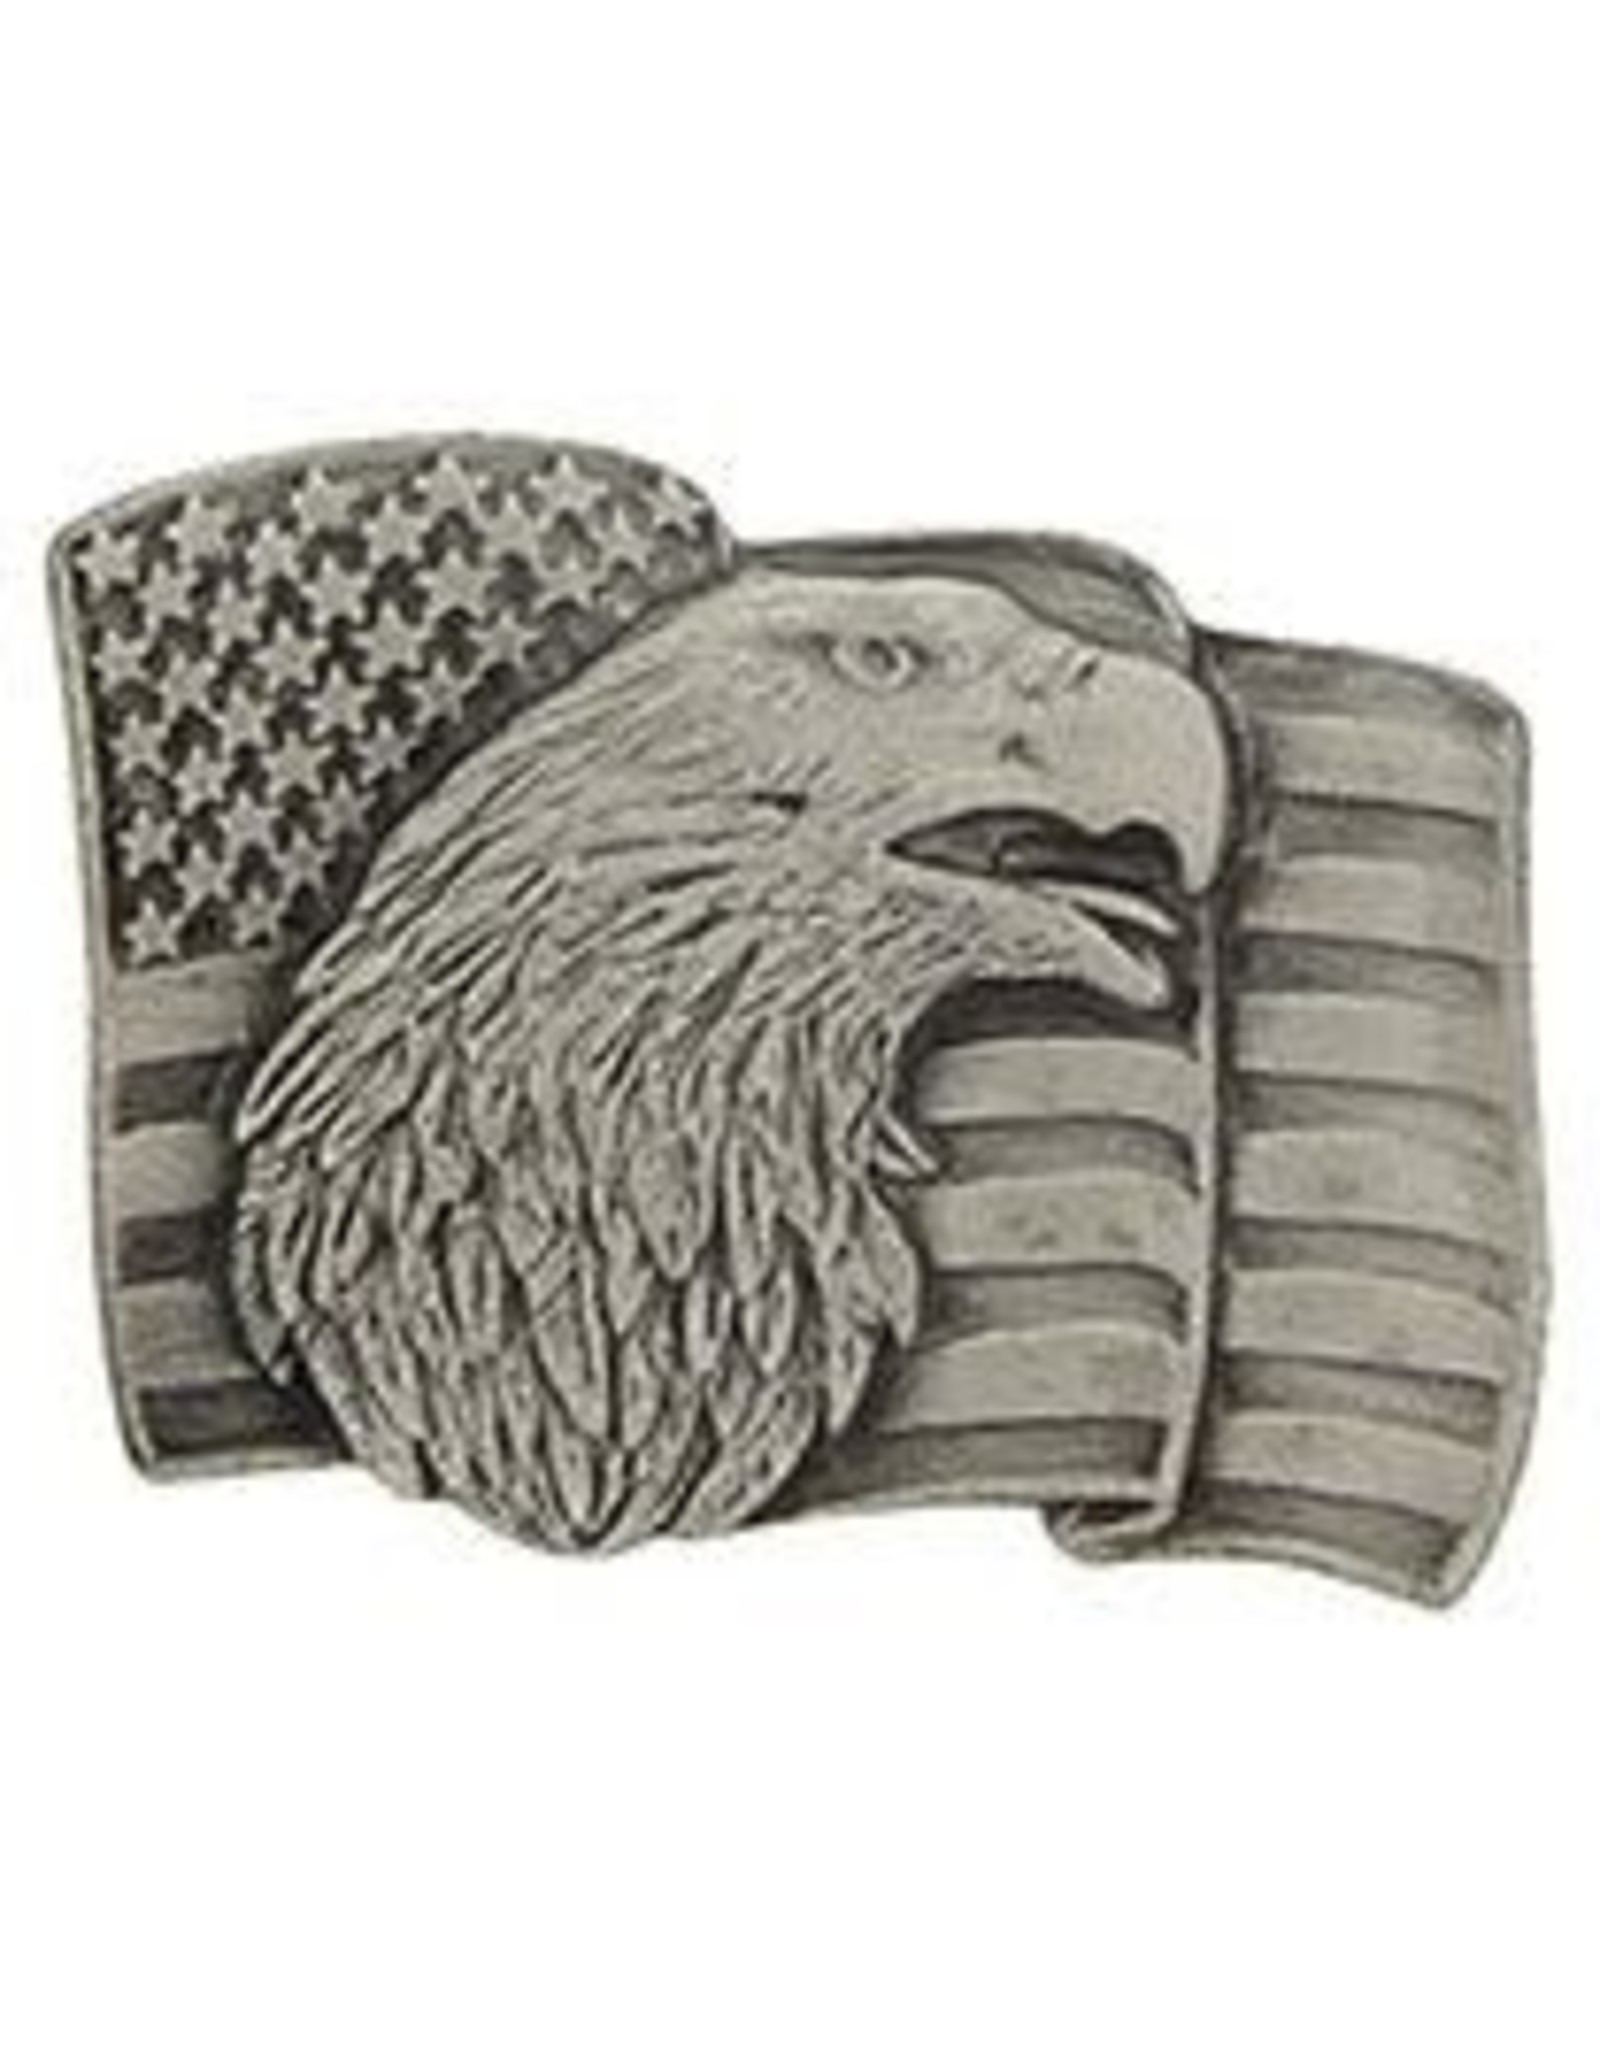 Pin - USA Flag Eagle Pewter